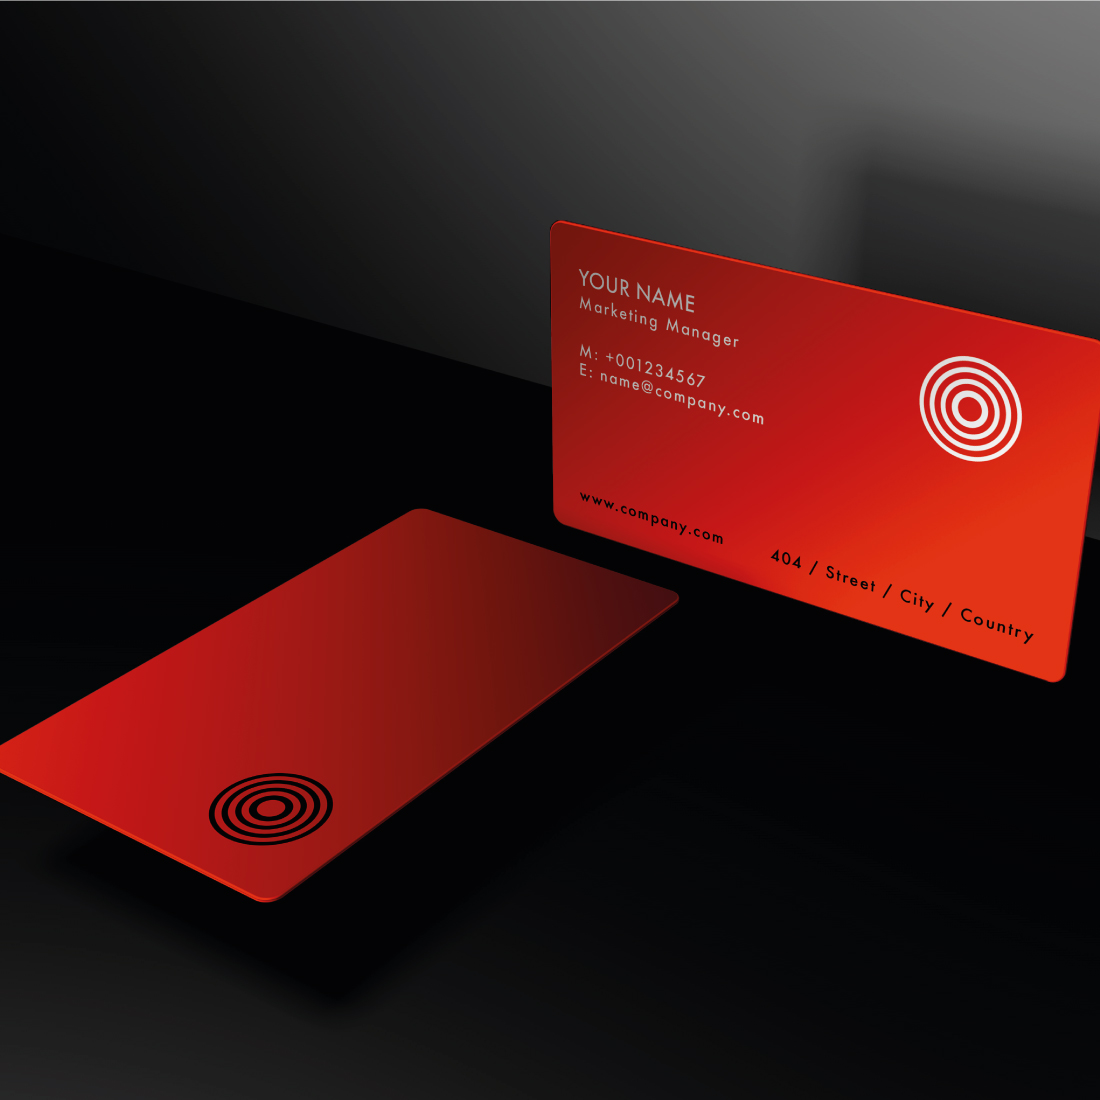 Business Card PSD Mockup & Adobe Illustrator open File cover image.